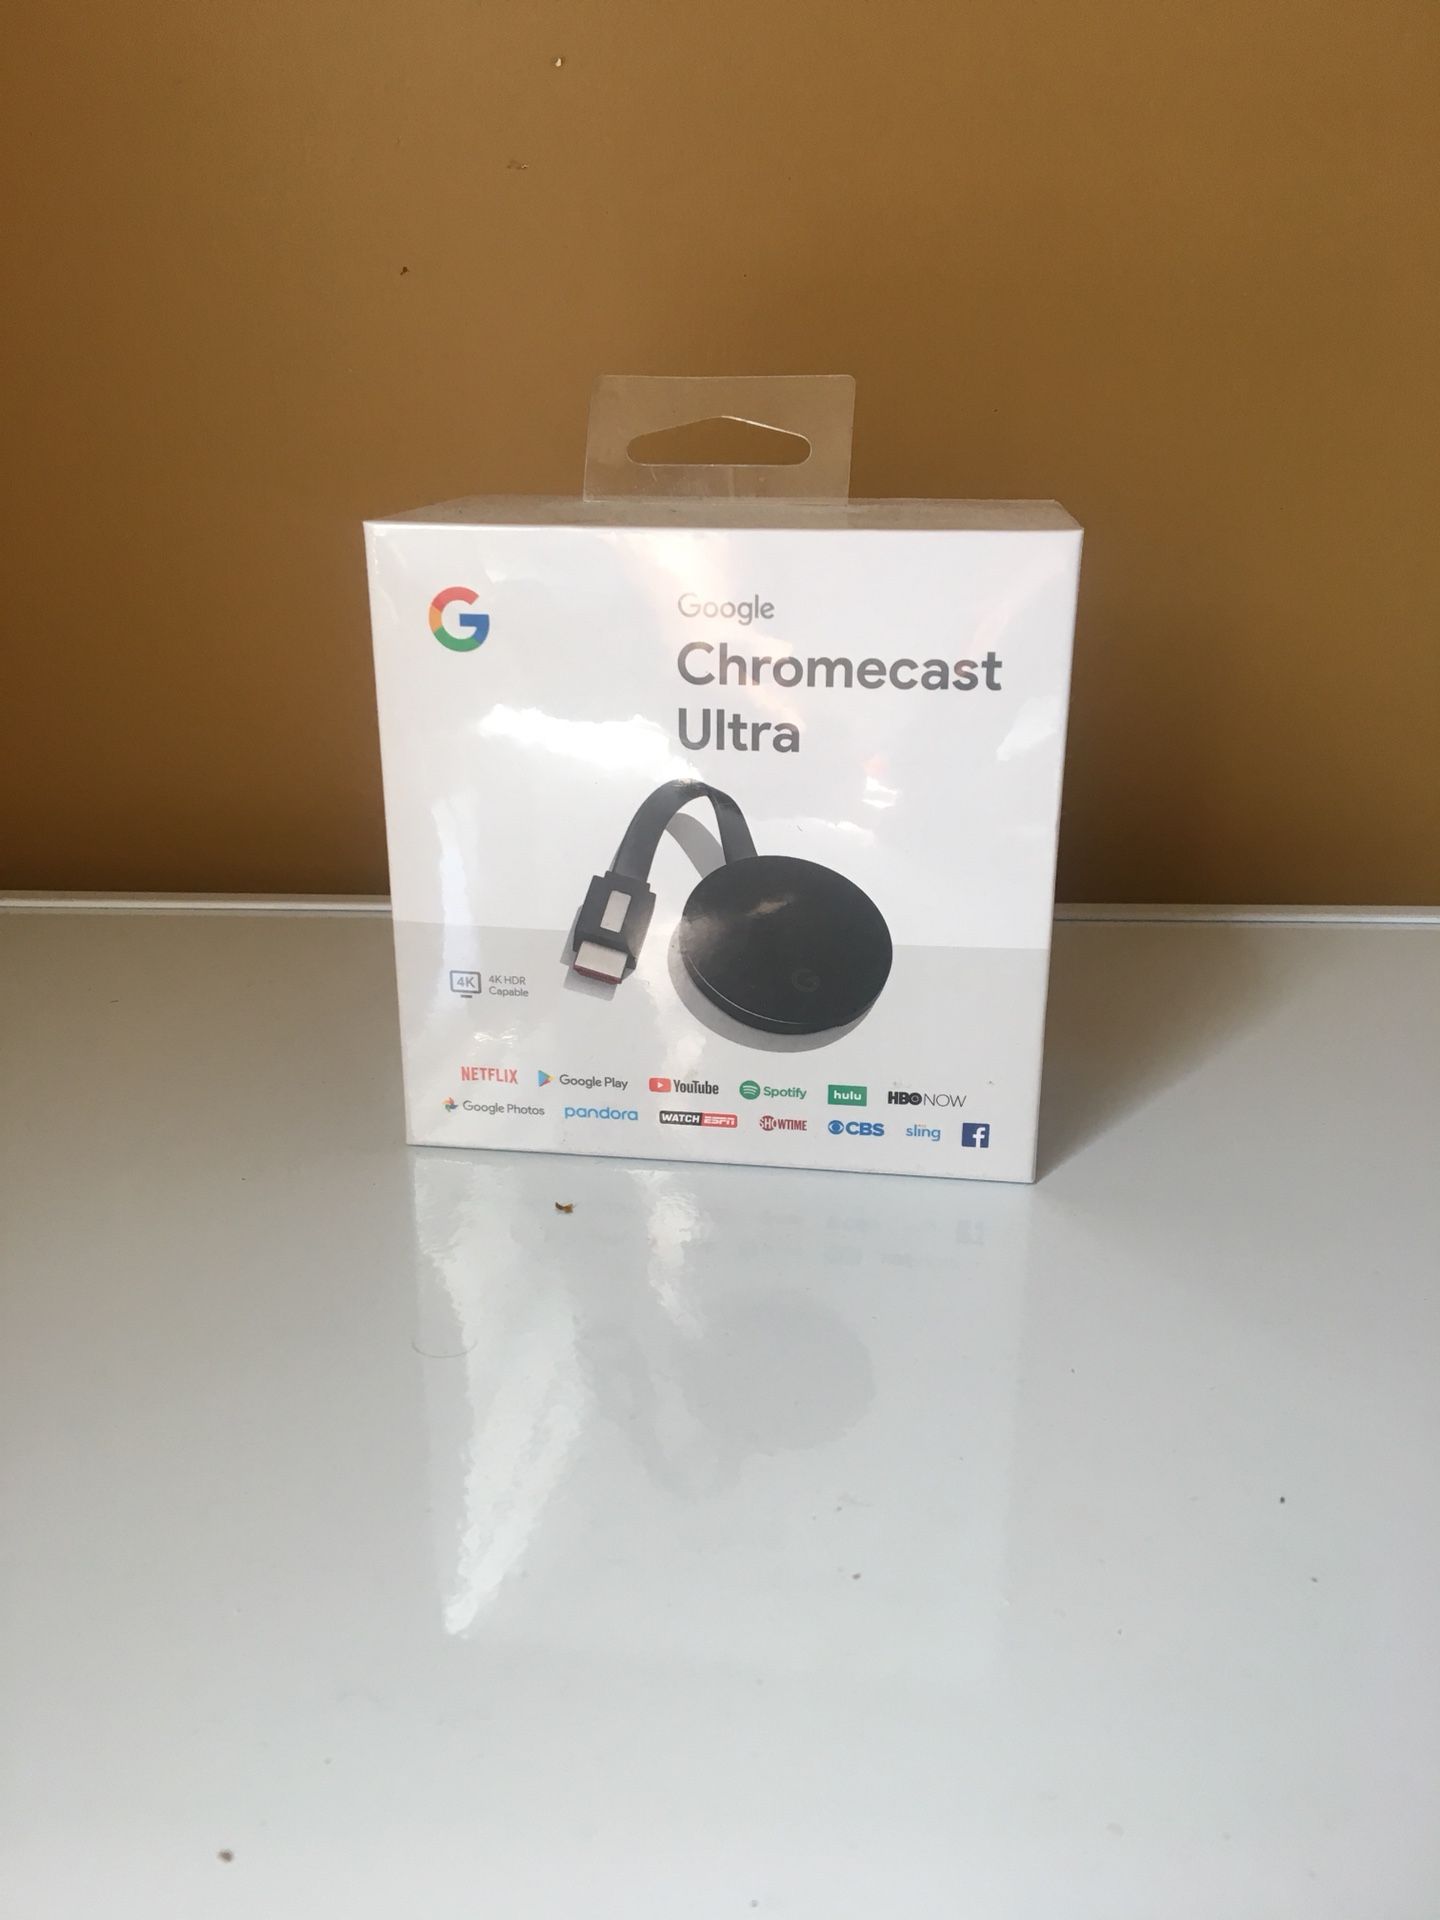 Google Chromecast ULtra